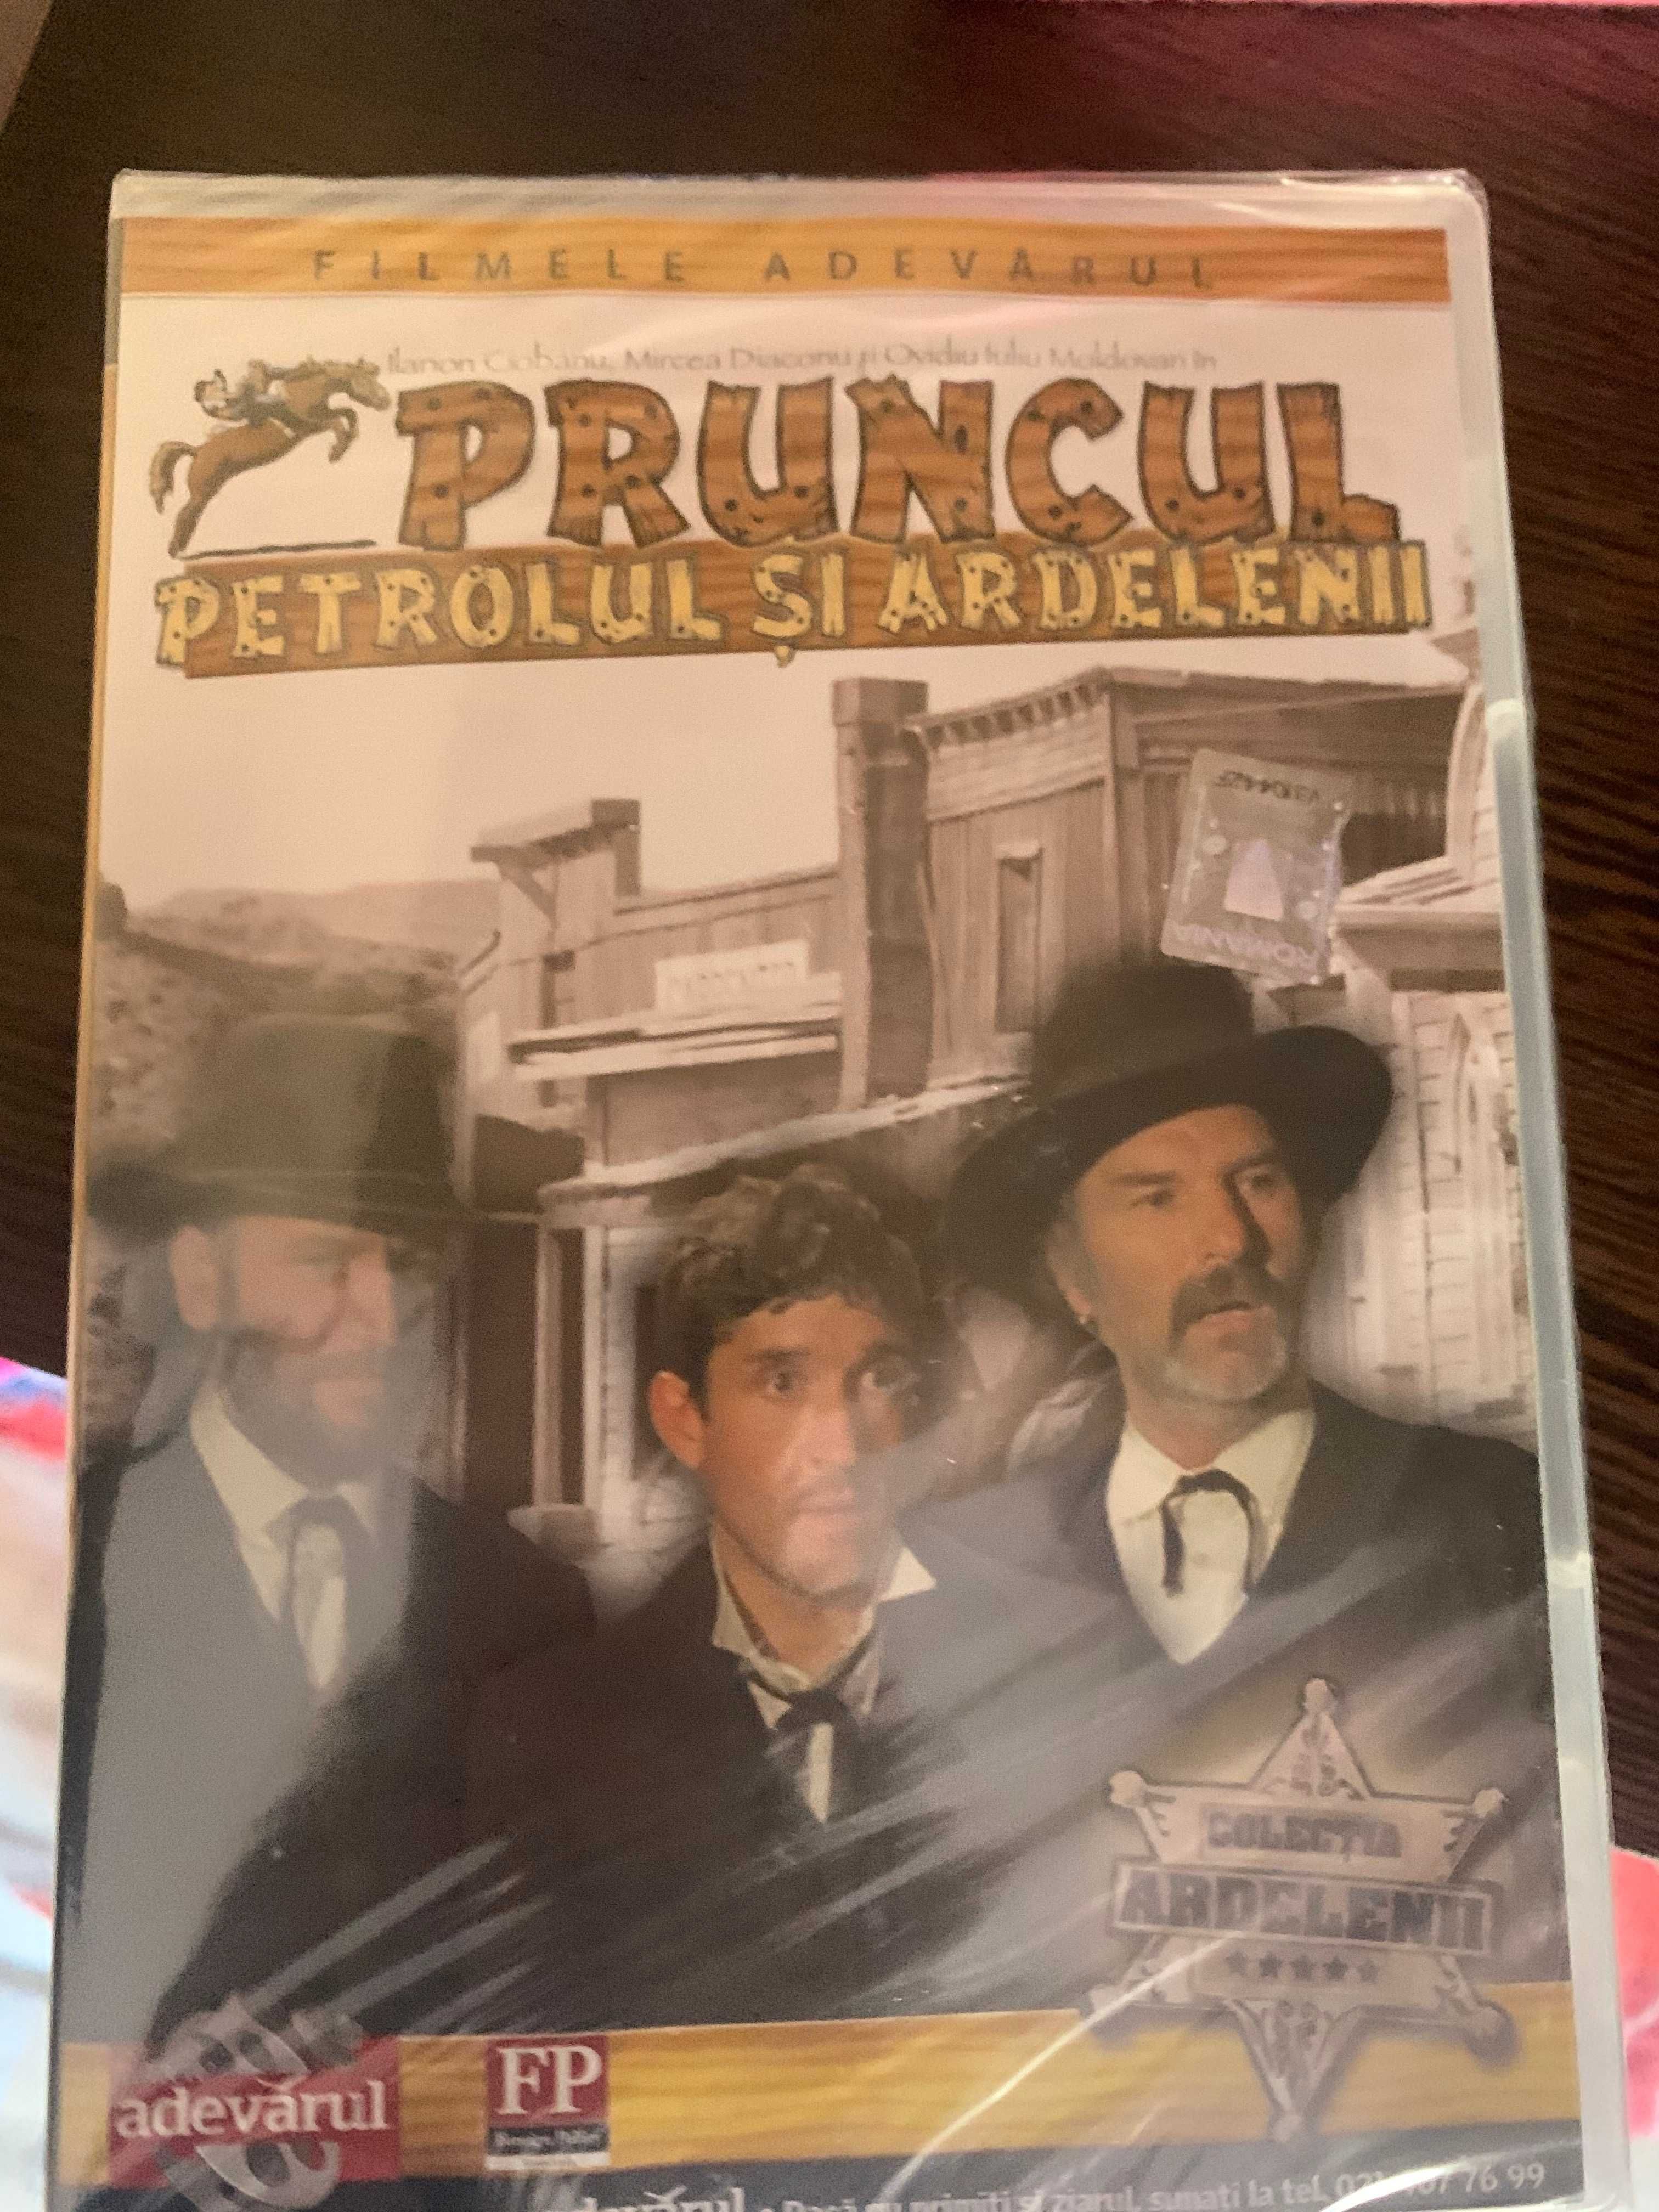 Set 3 DVD film românesc Colectia Ardelenii clasic vintage NOU Sigilat